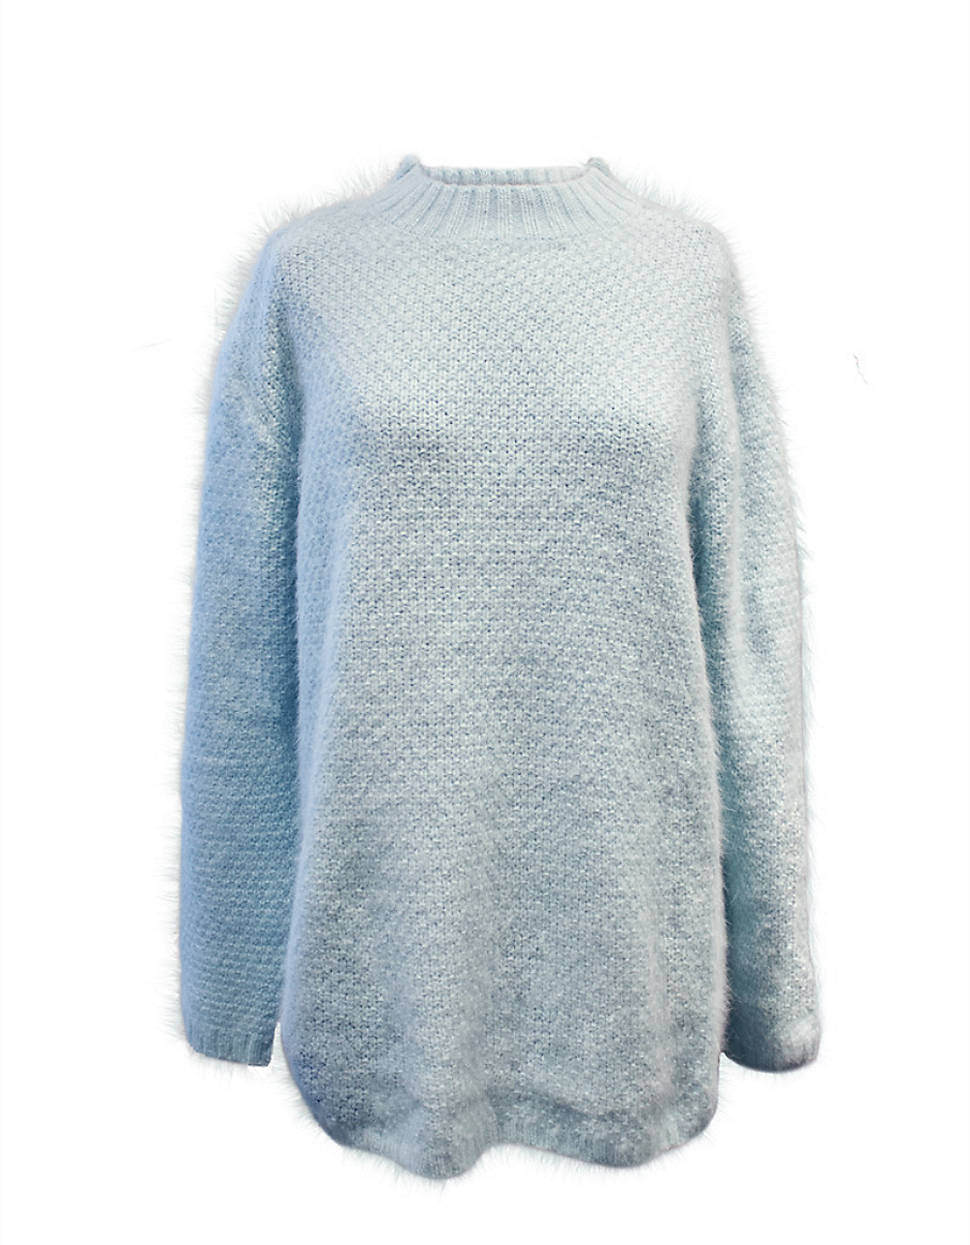 Cynthia Rowley Mock Turtleneck Textured Sweater in Blue (mint) | Lyst